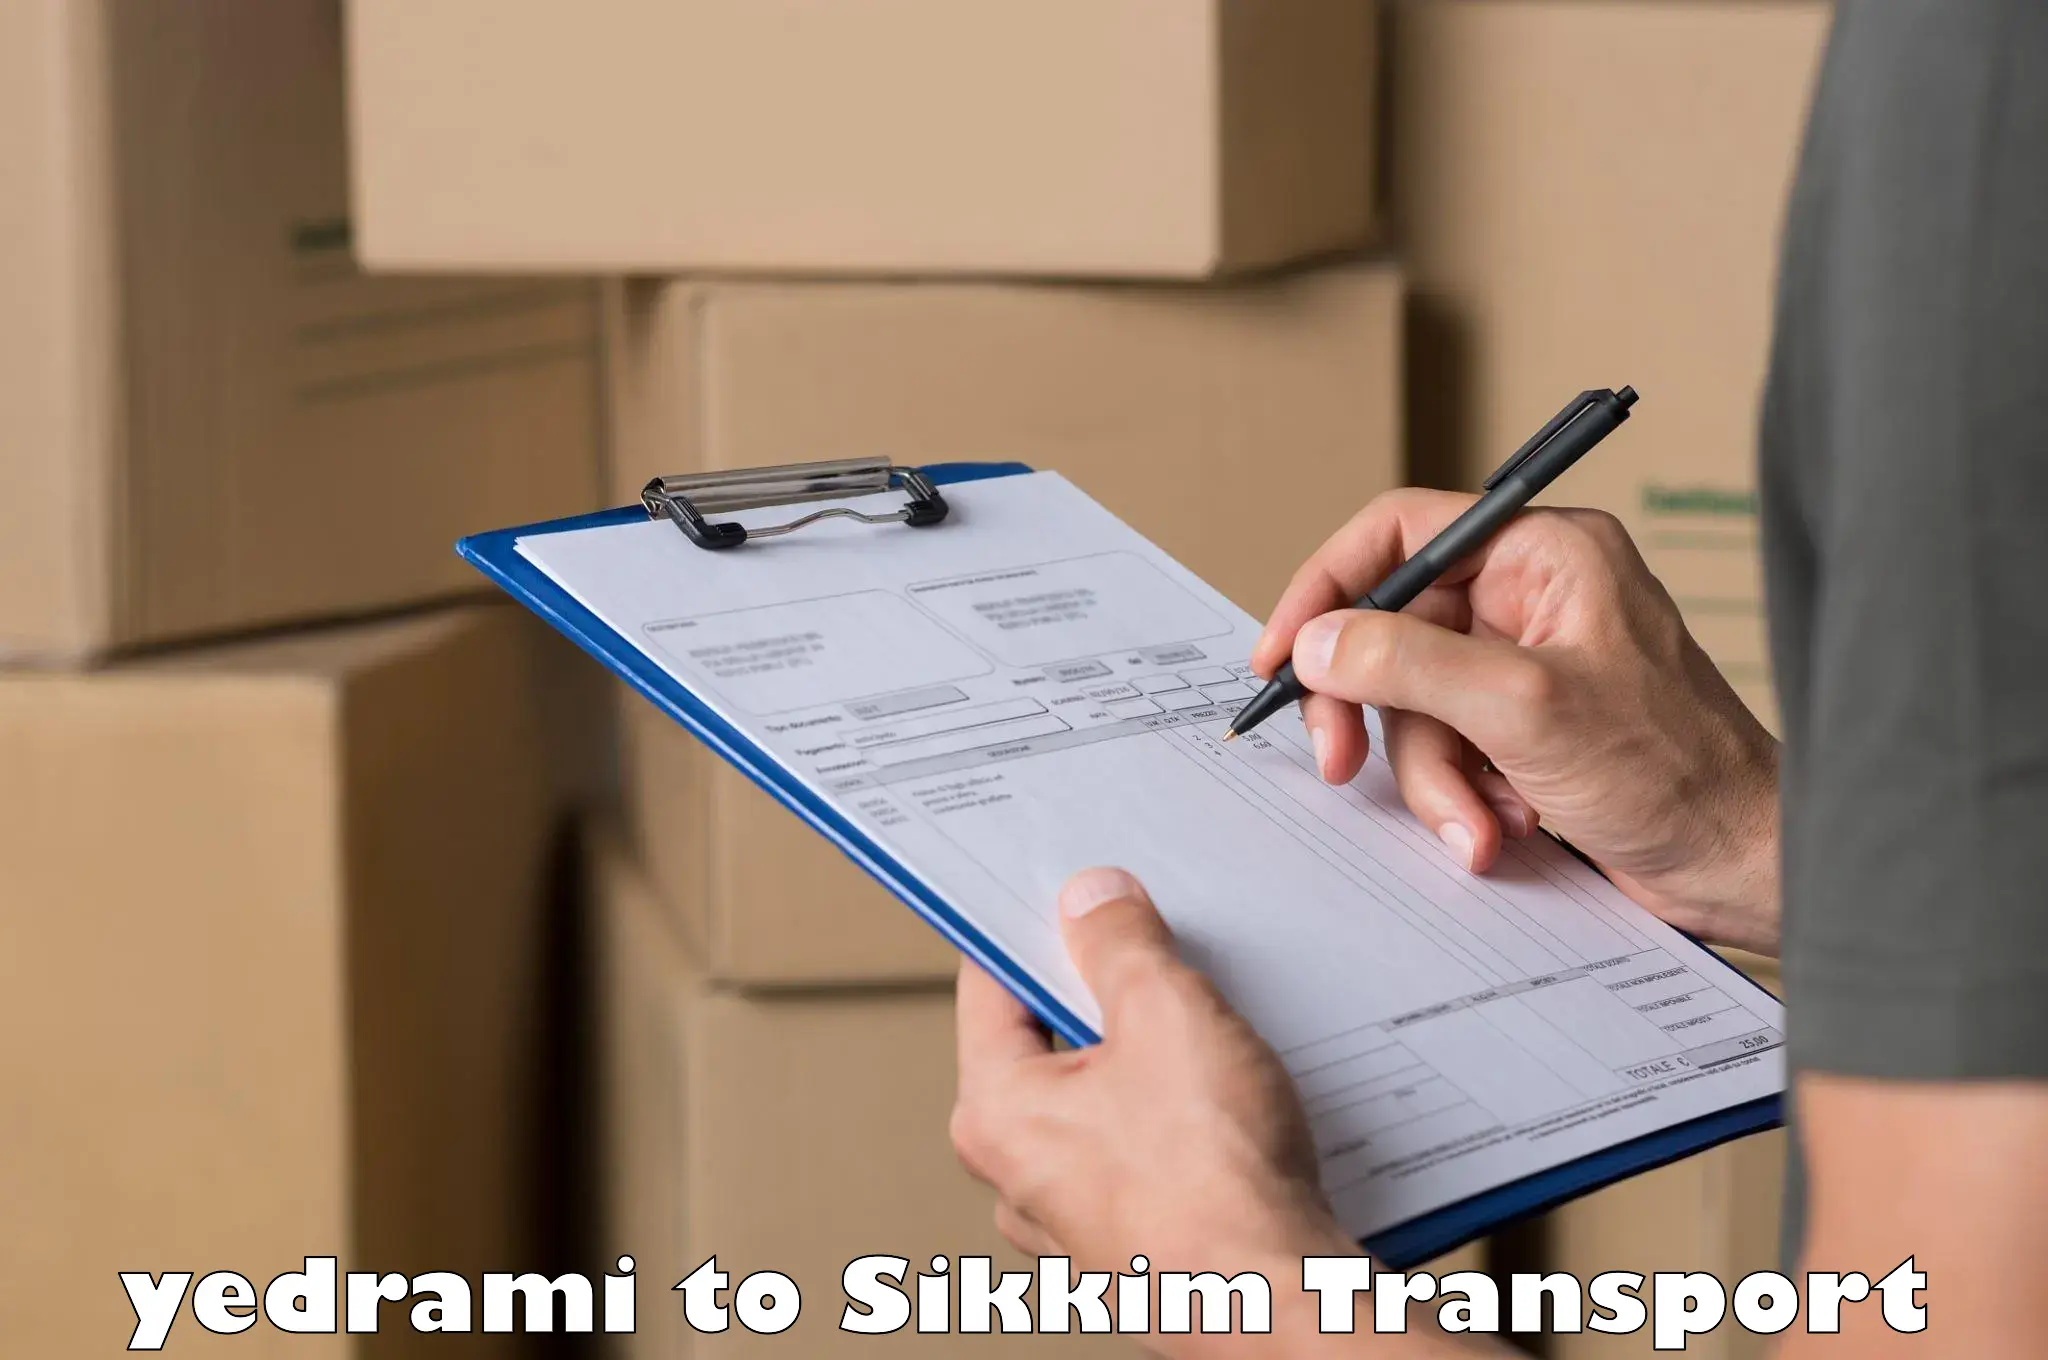 Shipping partner yedrami to East Sikkim